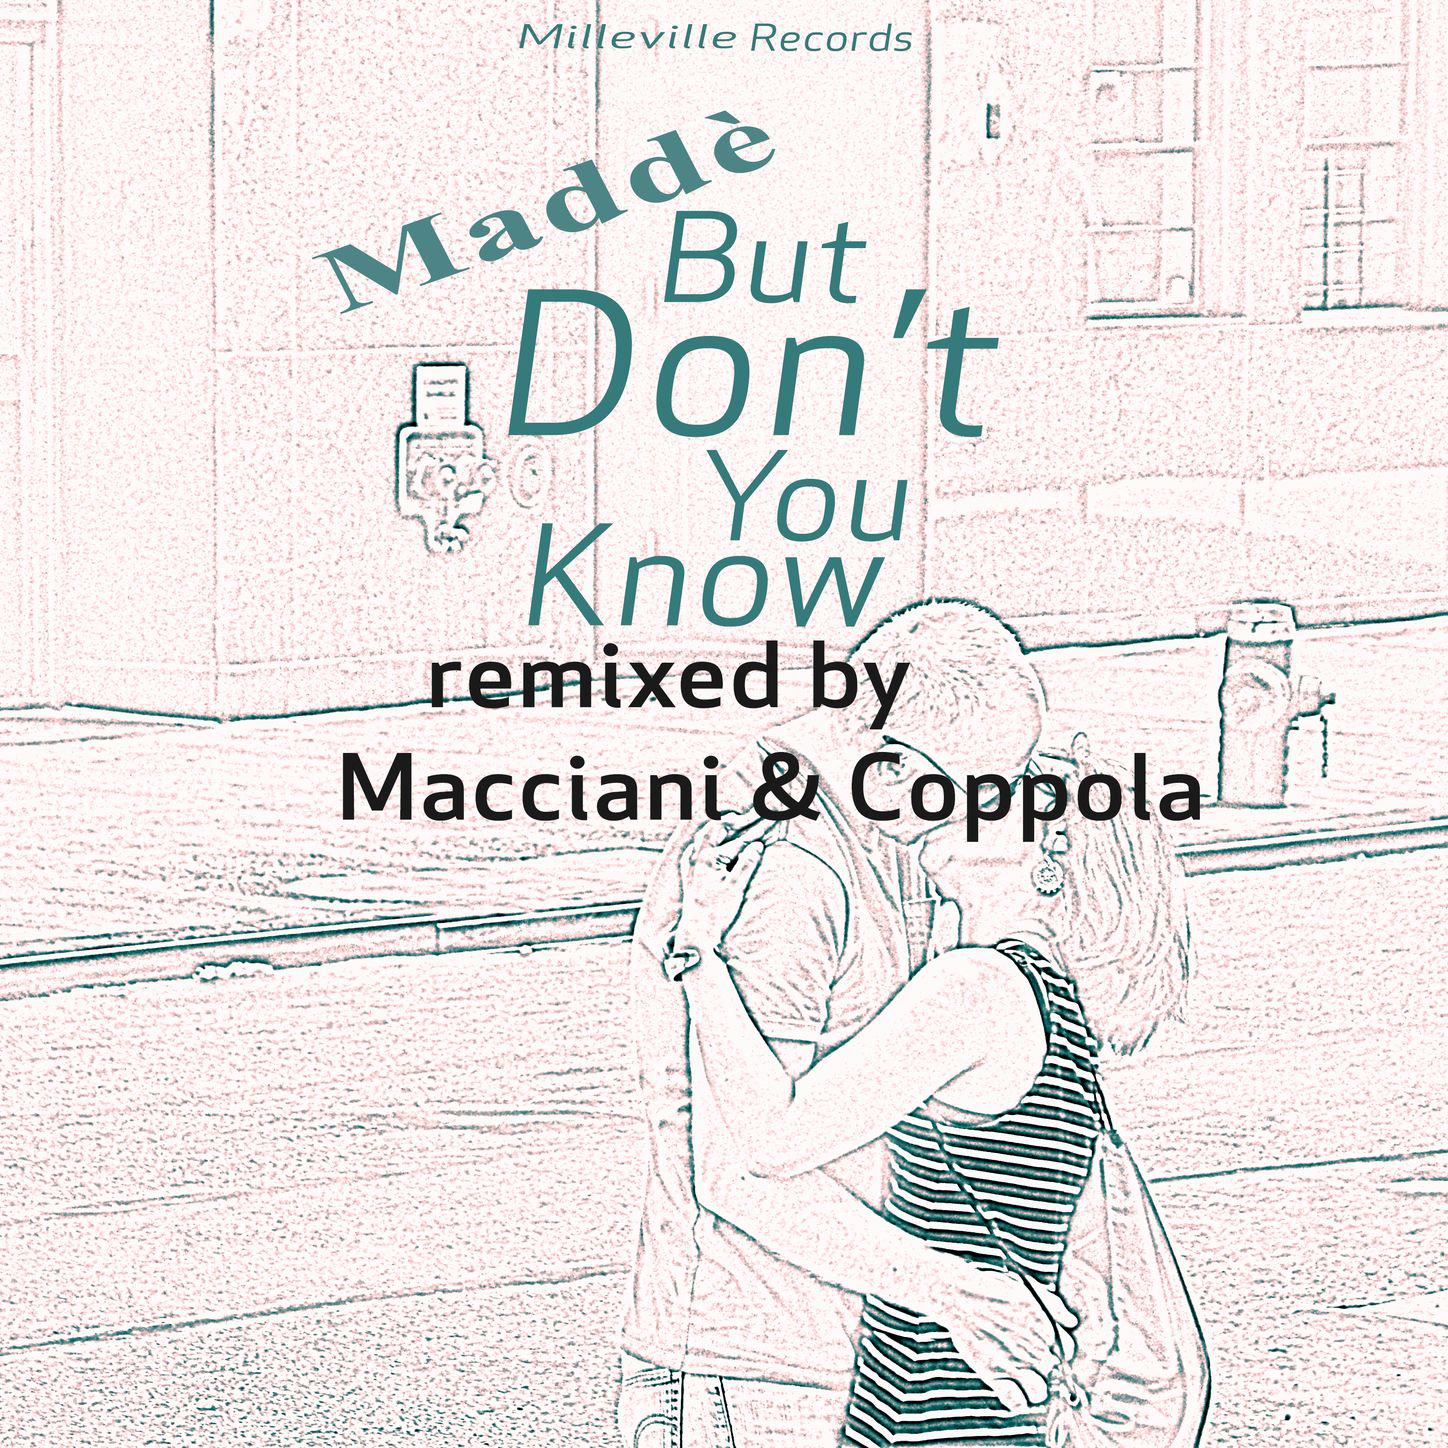 But Don't You Know (Macciani & Coppola Remix)